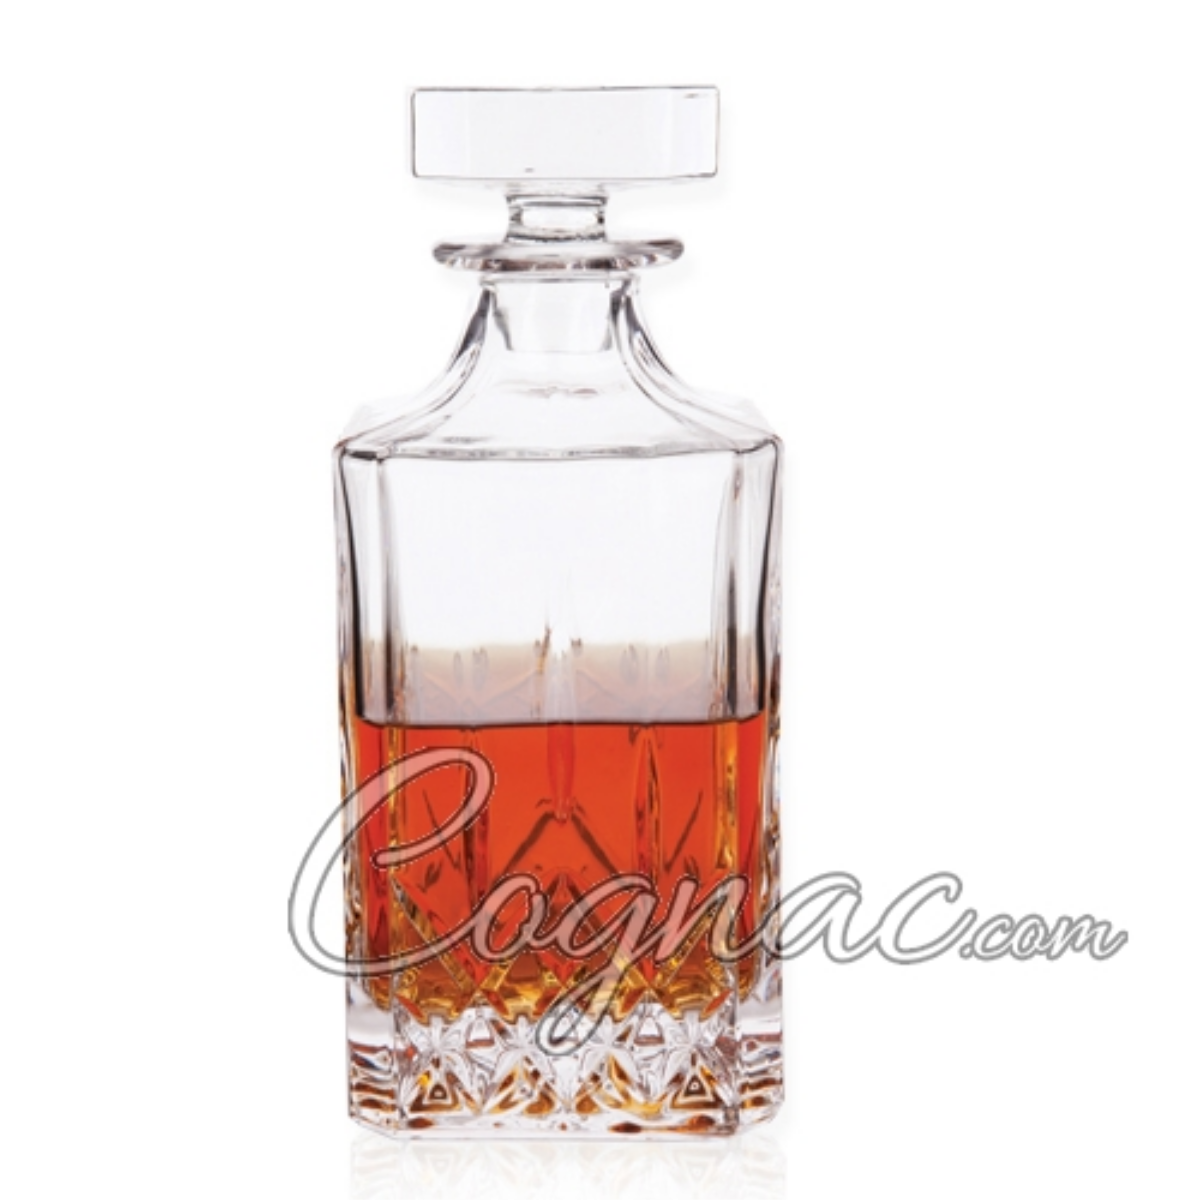 Classic Cut Glass Liquor Decanter